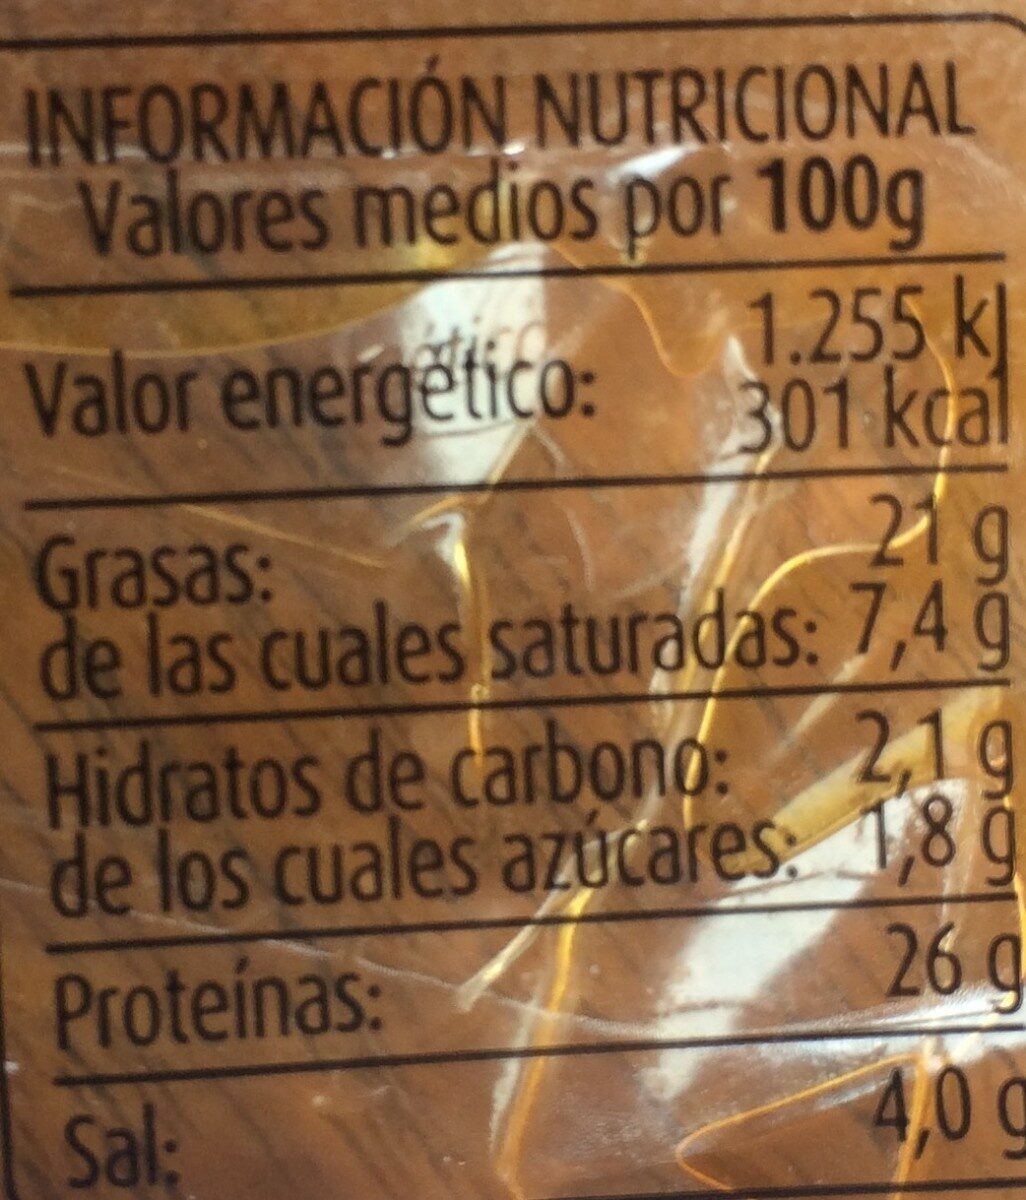 Chorizo extra - Nutrition facts - es